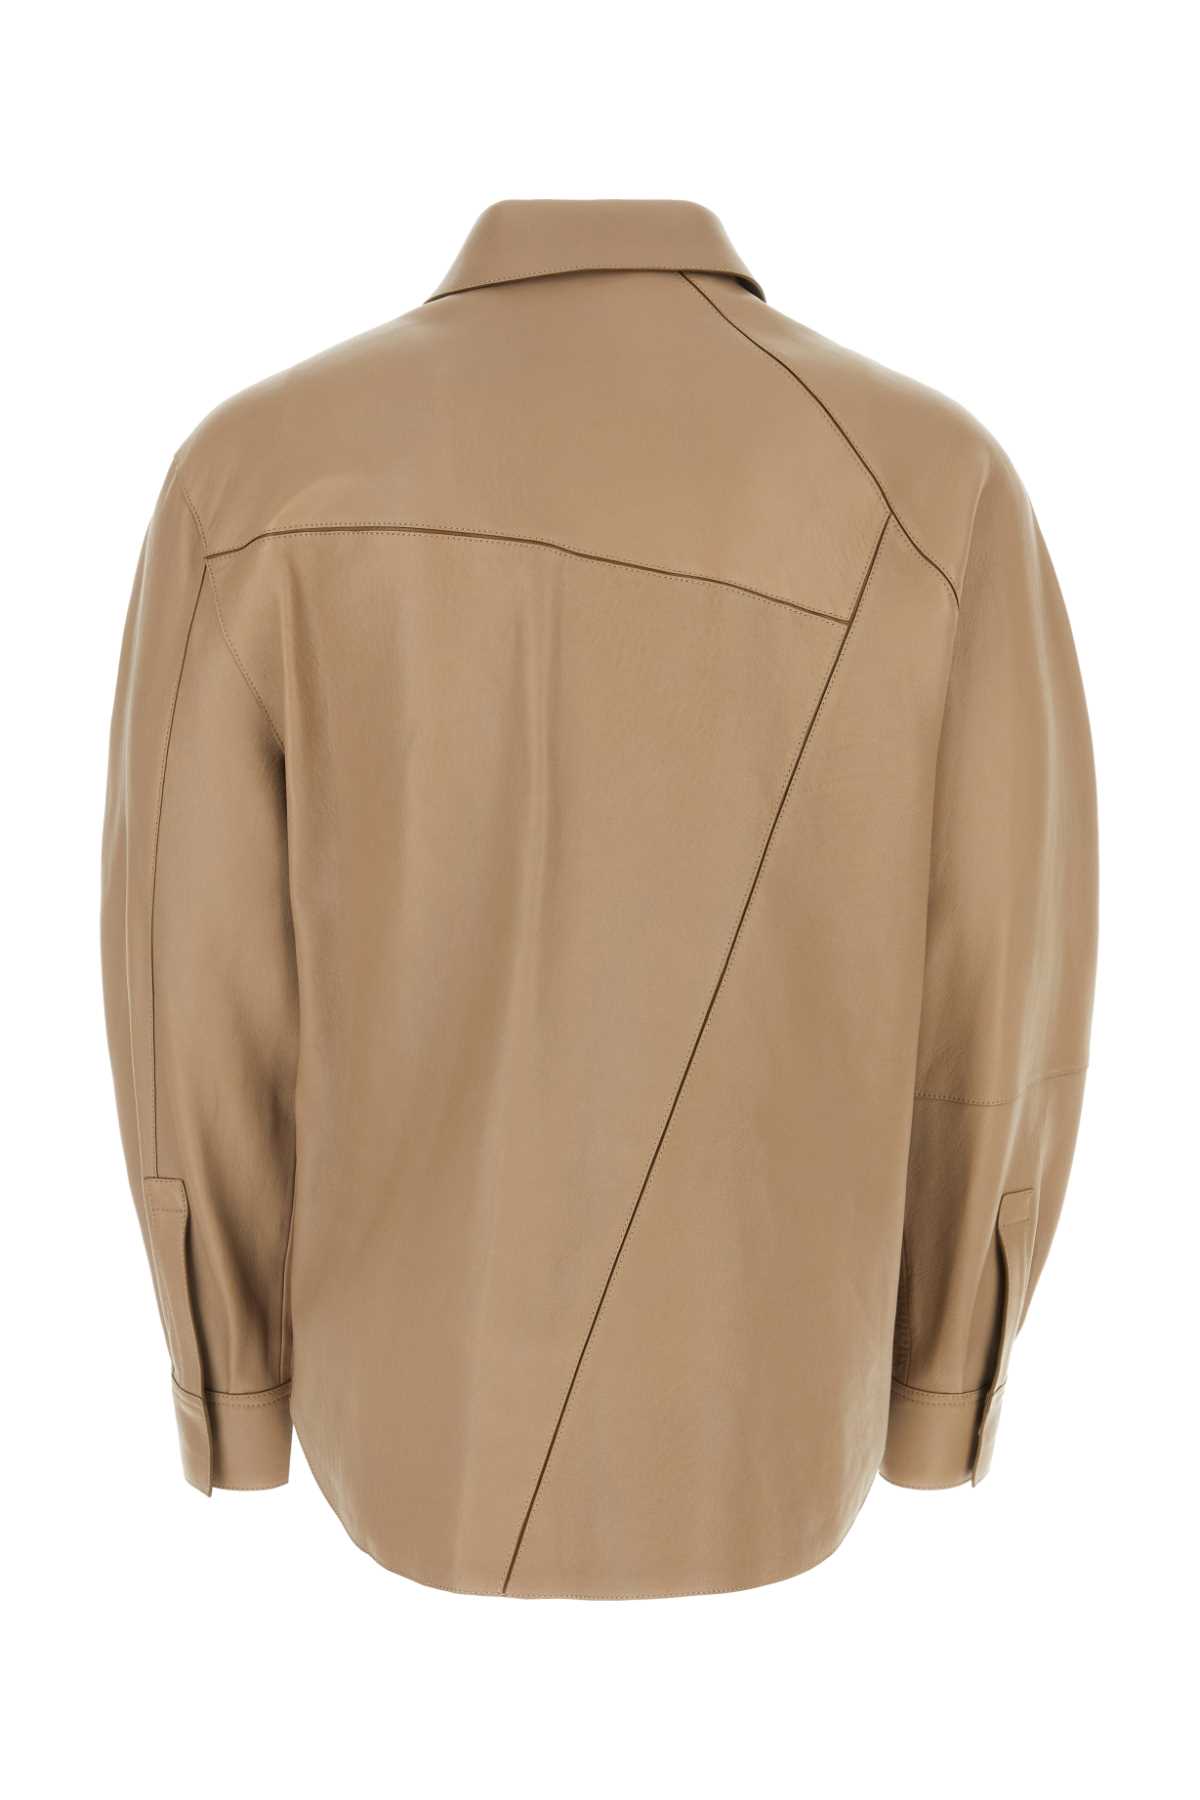 Loewe Dove Grey Leather Shirt In Brown